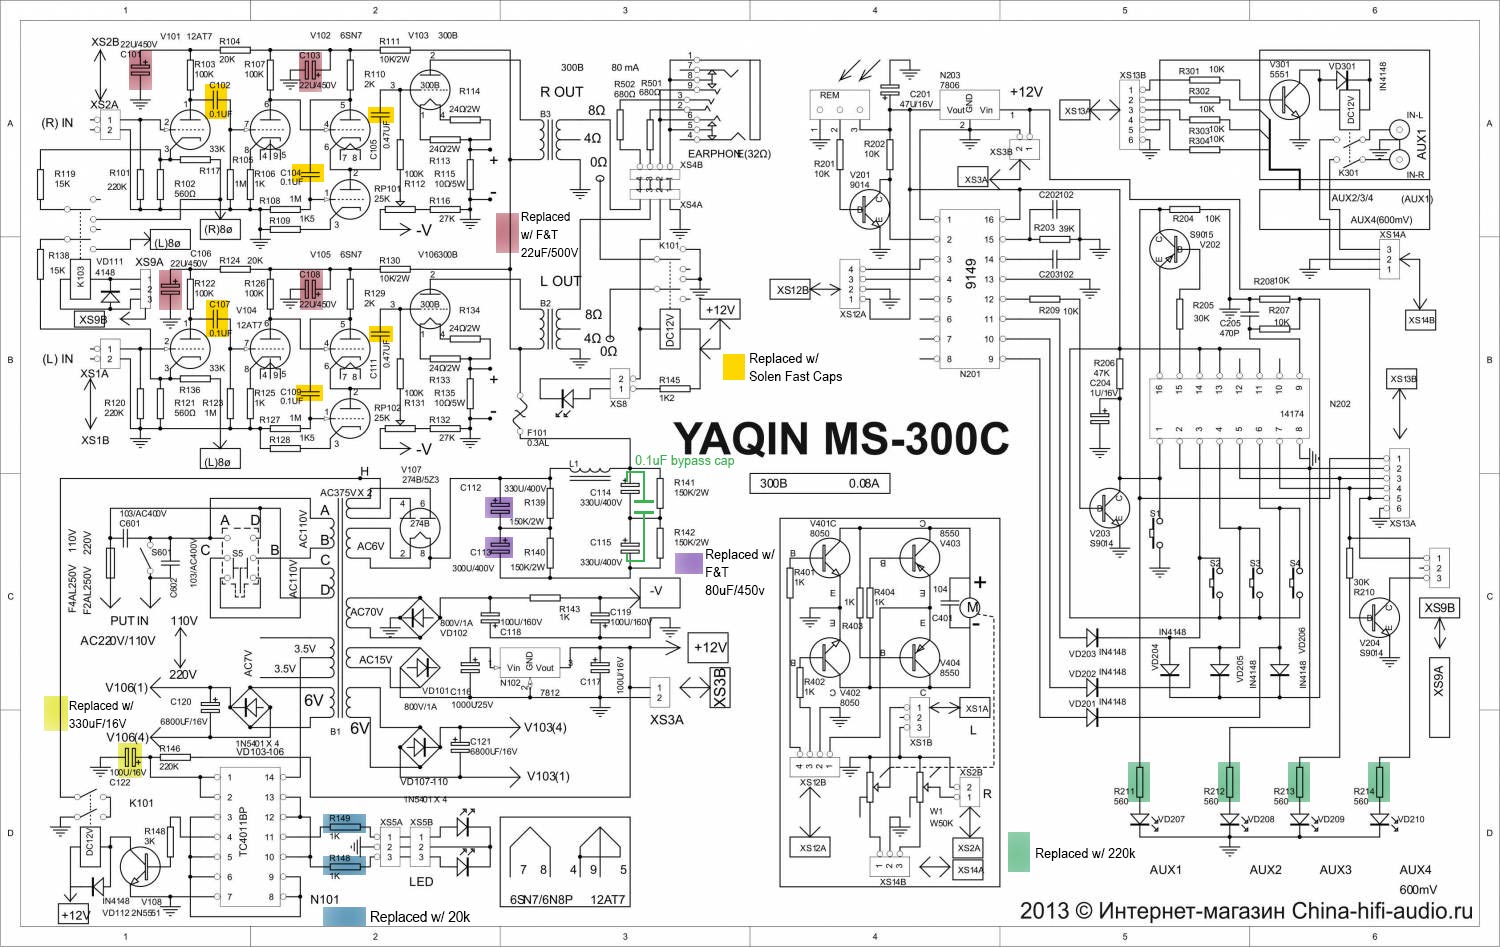 Yaqin MS-300C tube amp schematic, upgrades